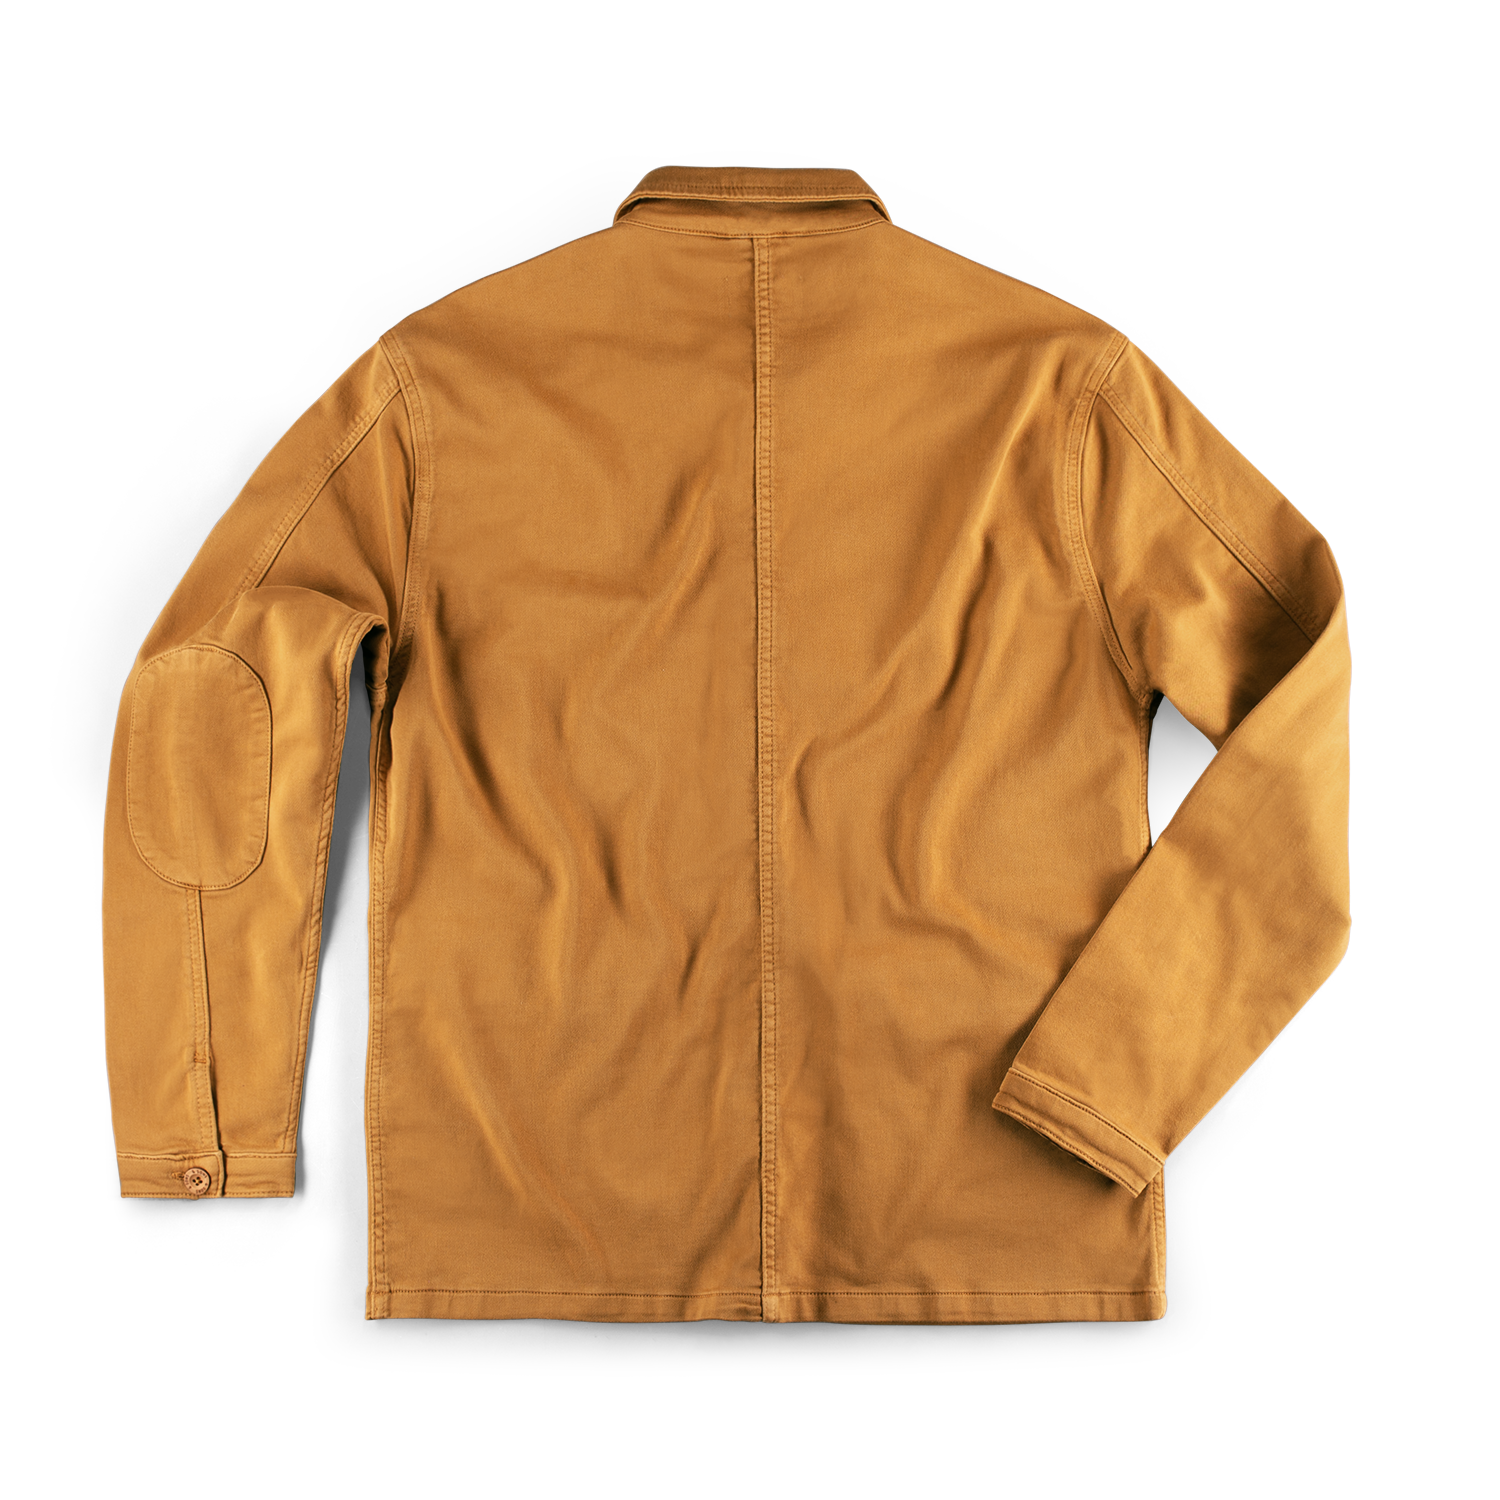 u0026SONS Carver Jacket Tan – www.andsons.us